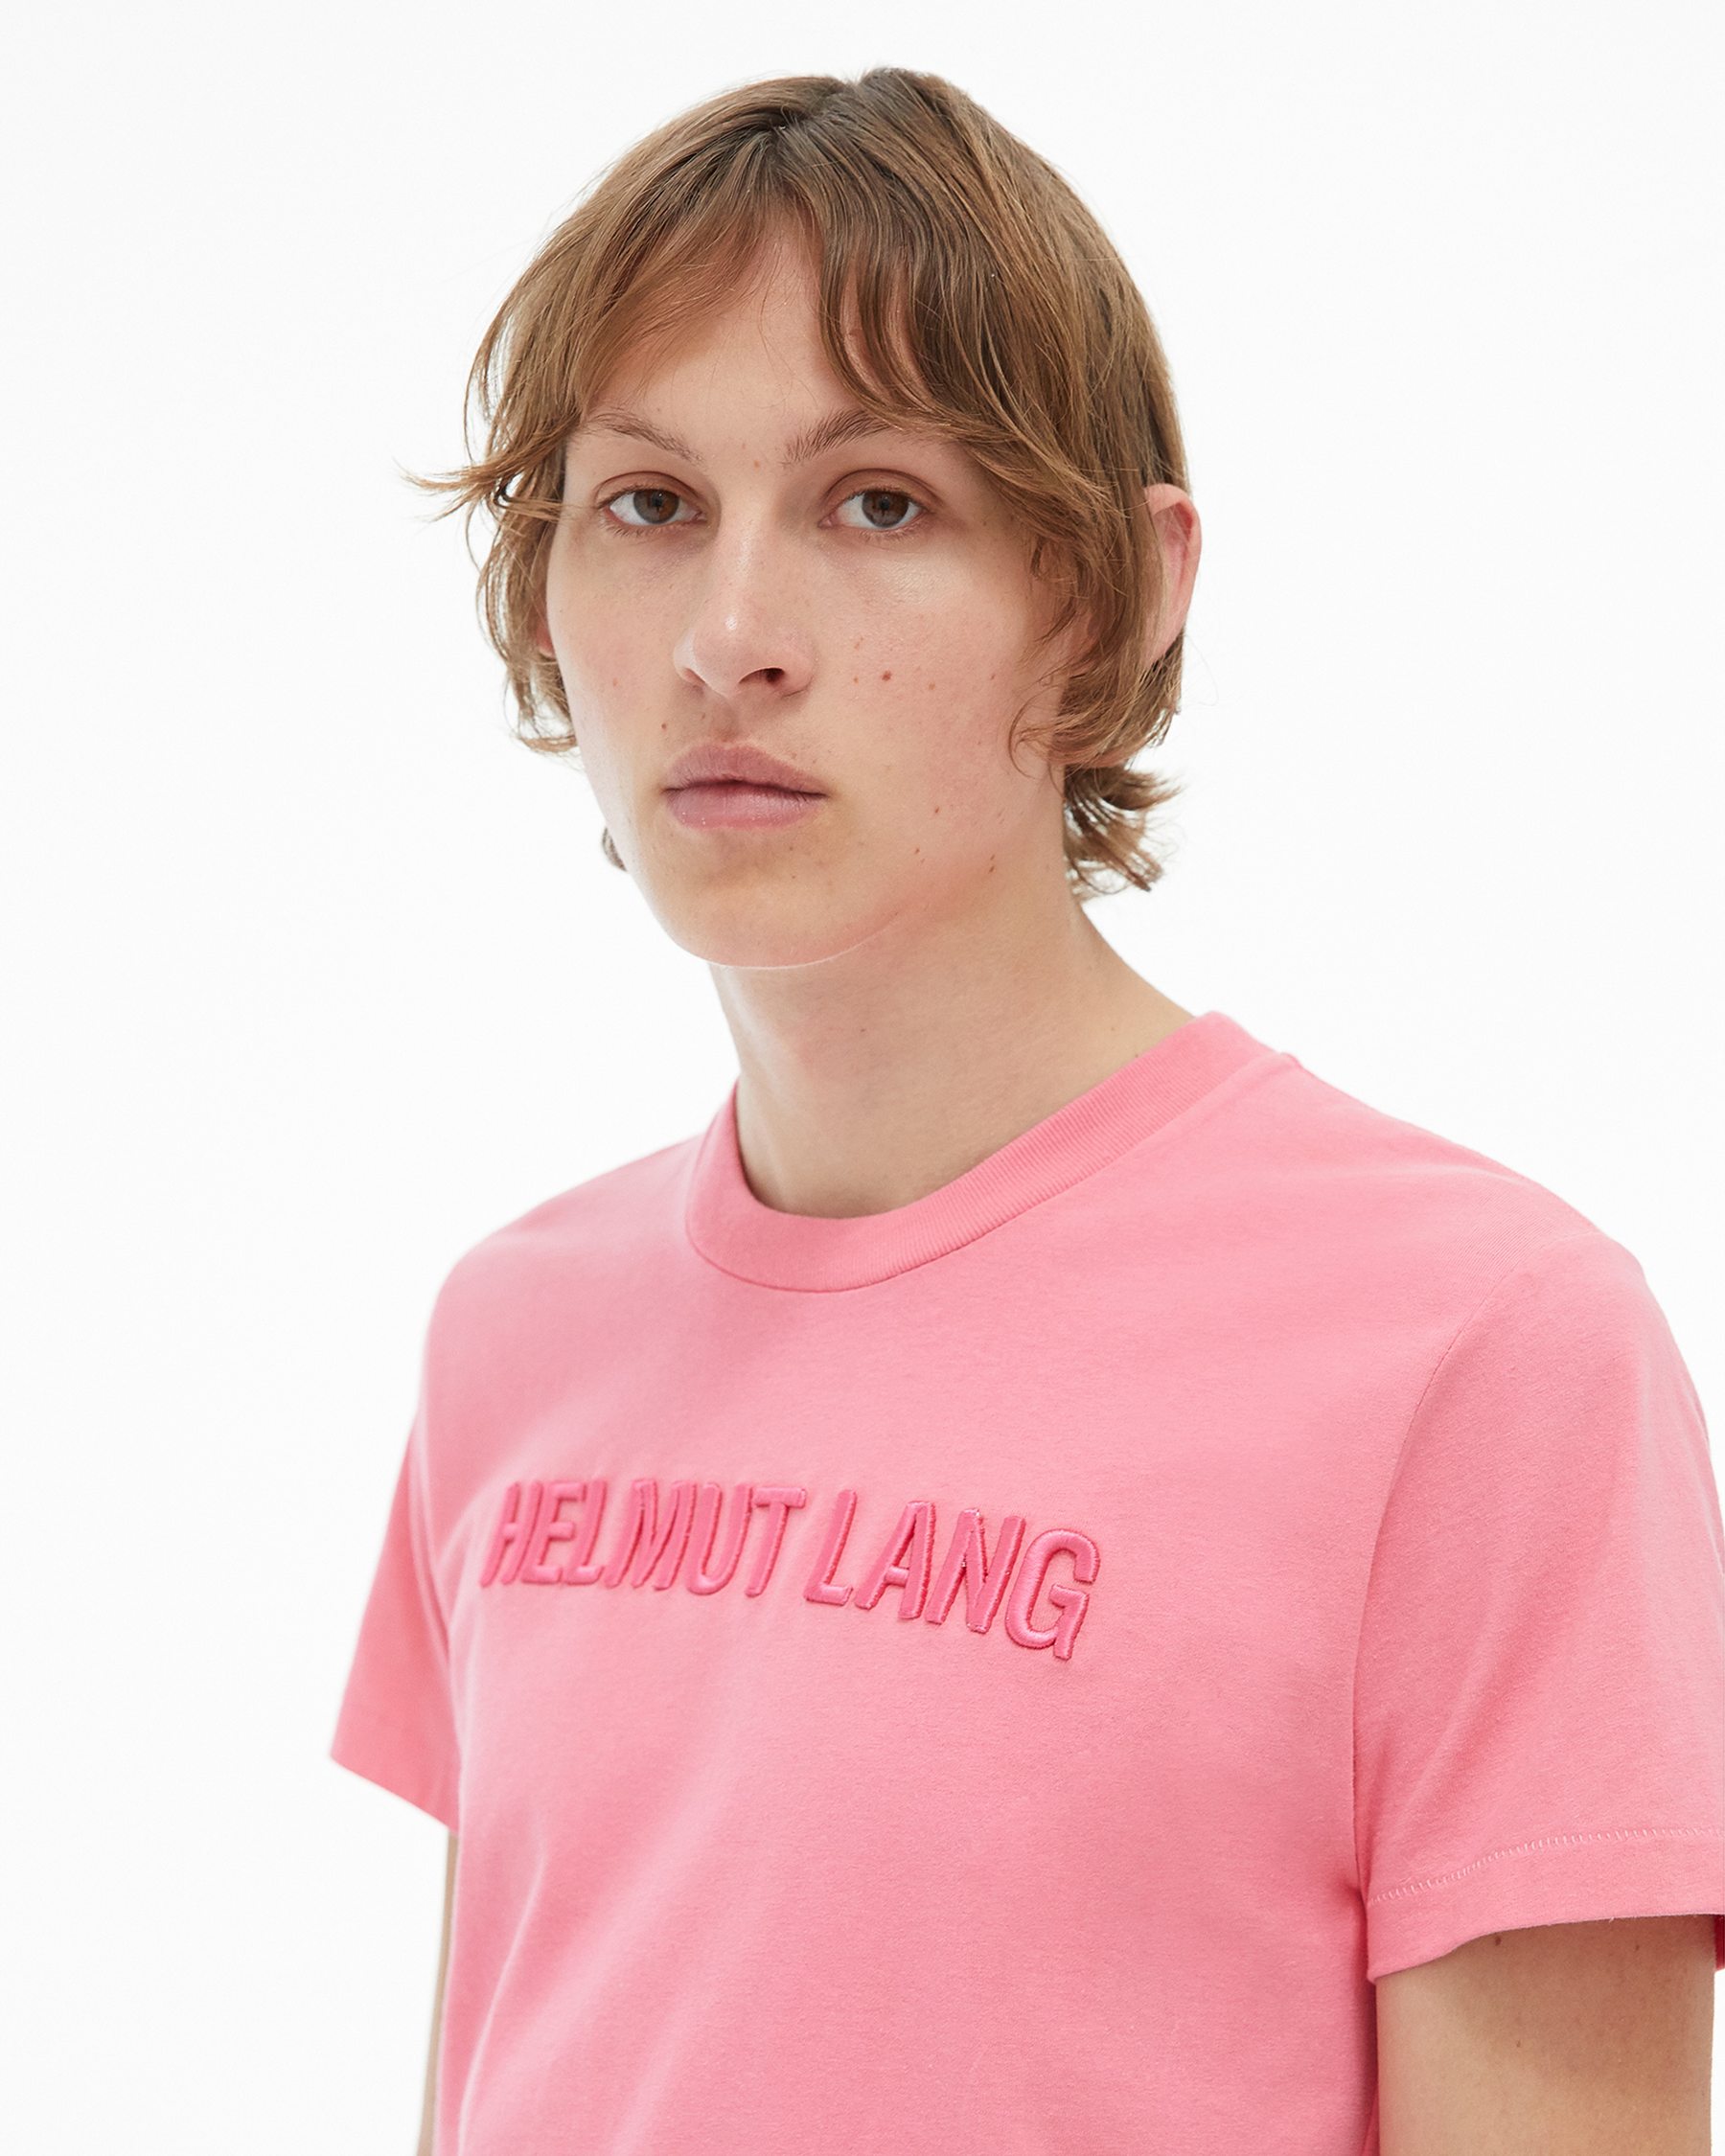 Helmut Lang Standard T-Shirt | WWW.HELMUTLANG.COM | Helmut Lang